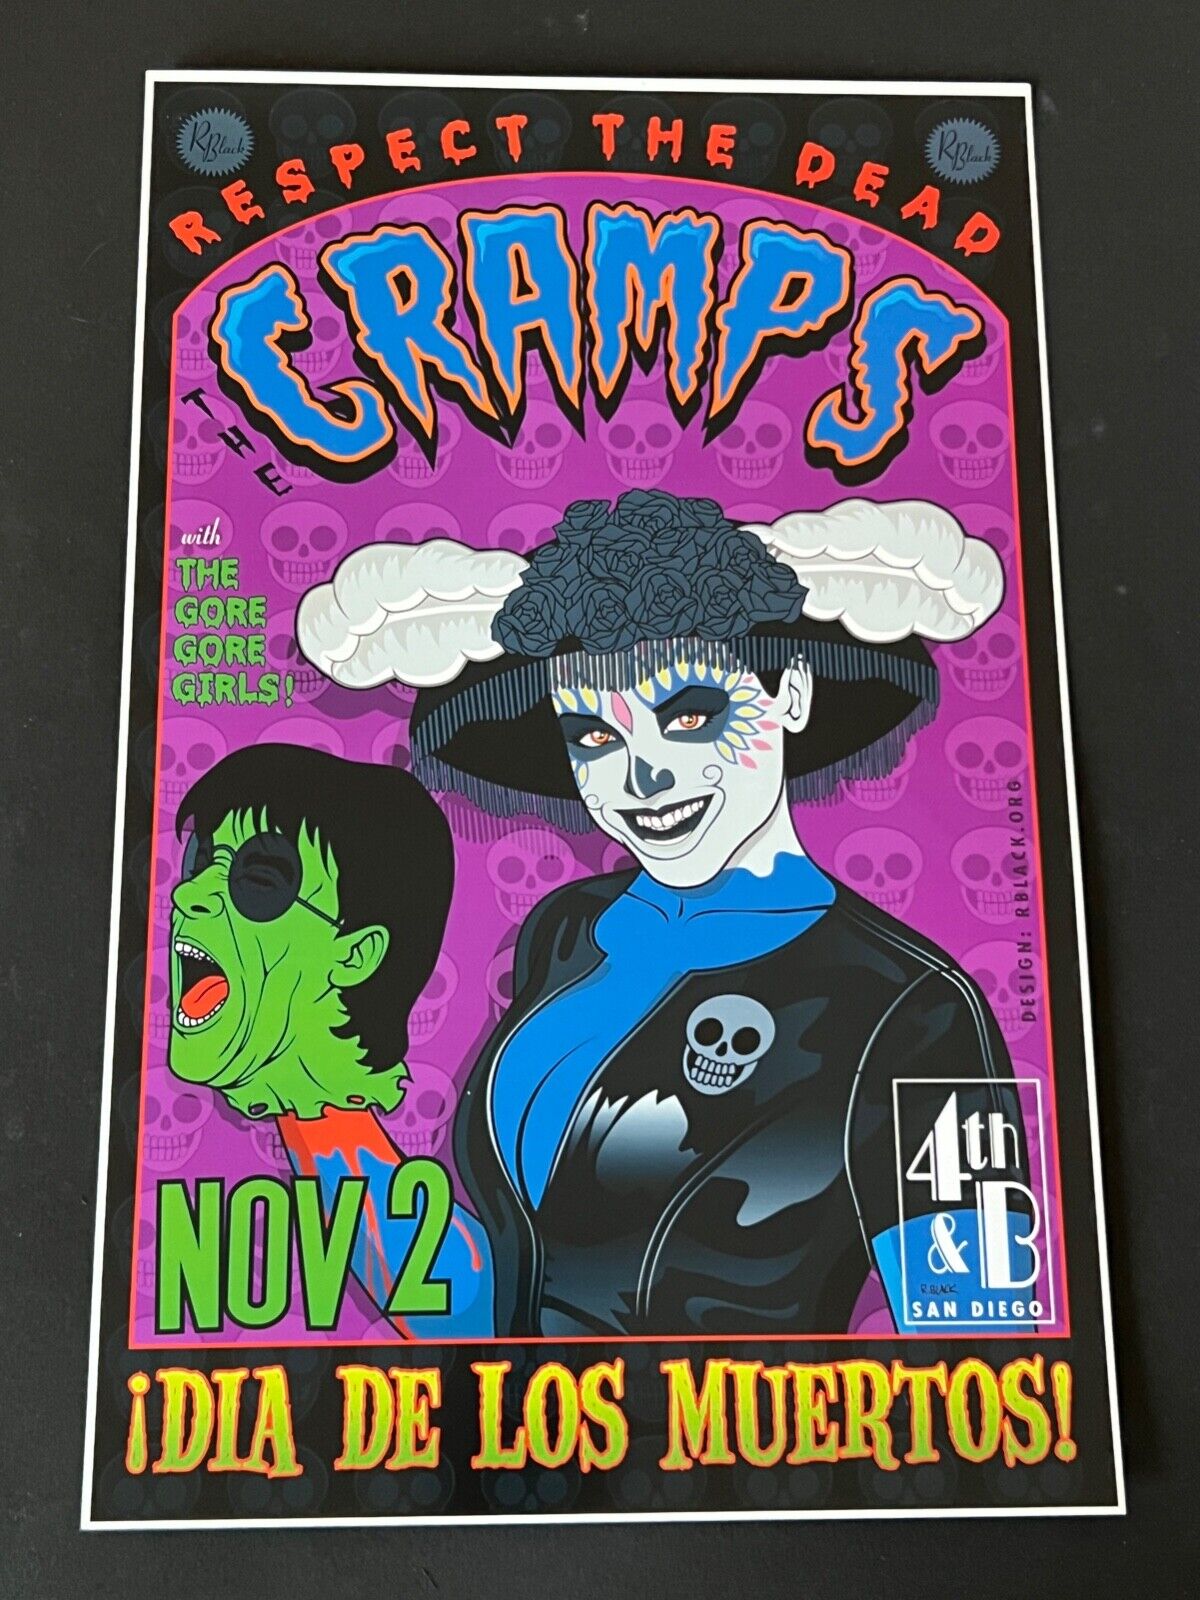 The Cramps Dia de Muertos 4th & B San Diego 2003 Original Concert Poster